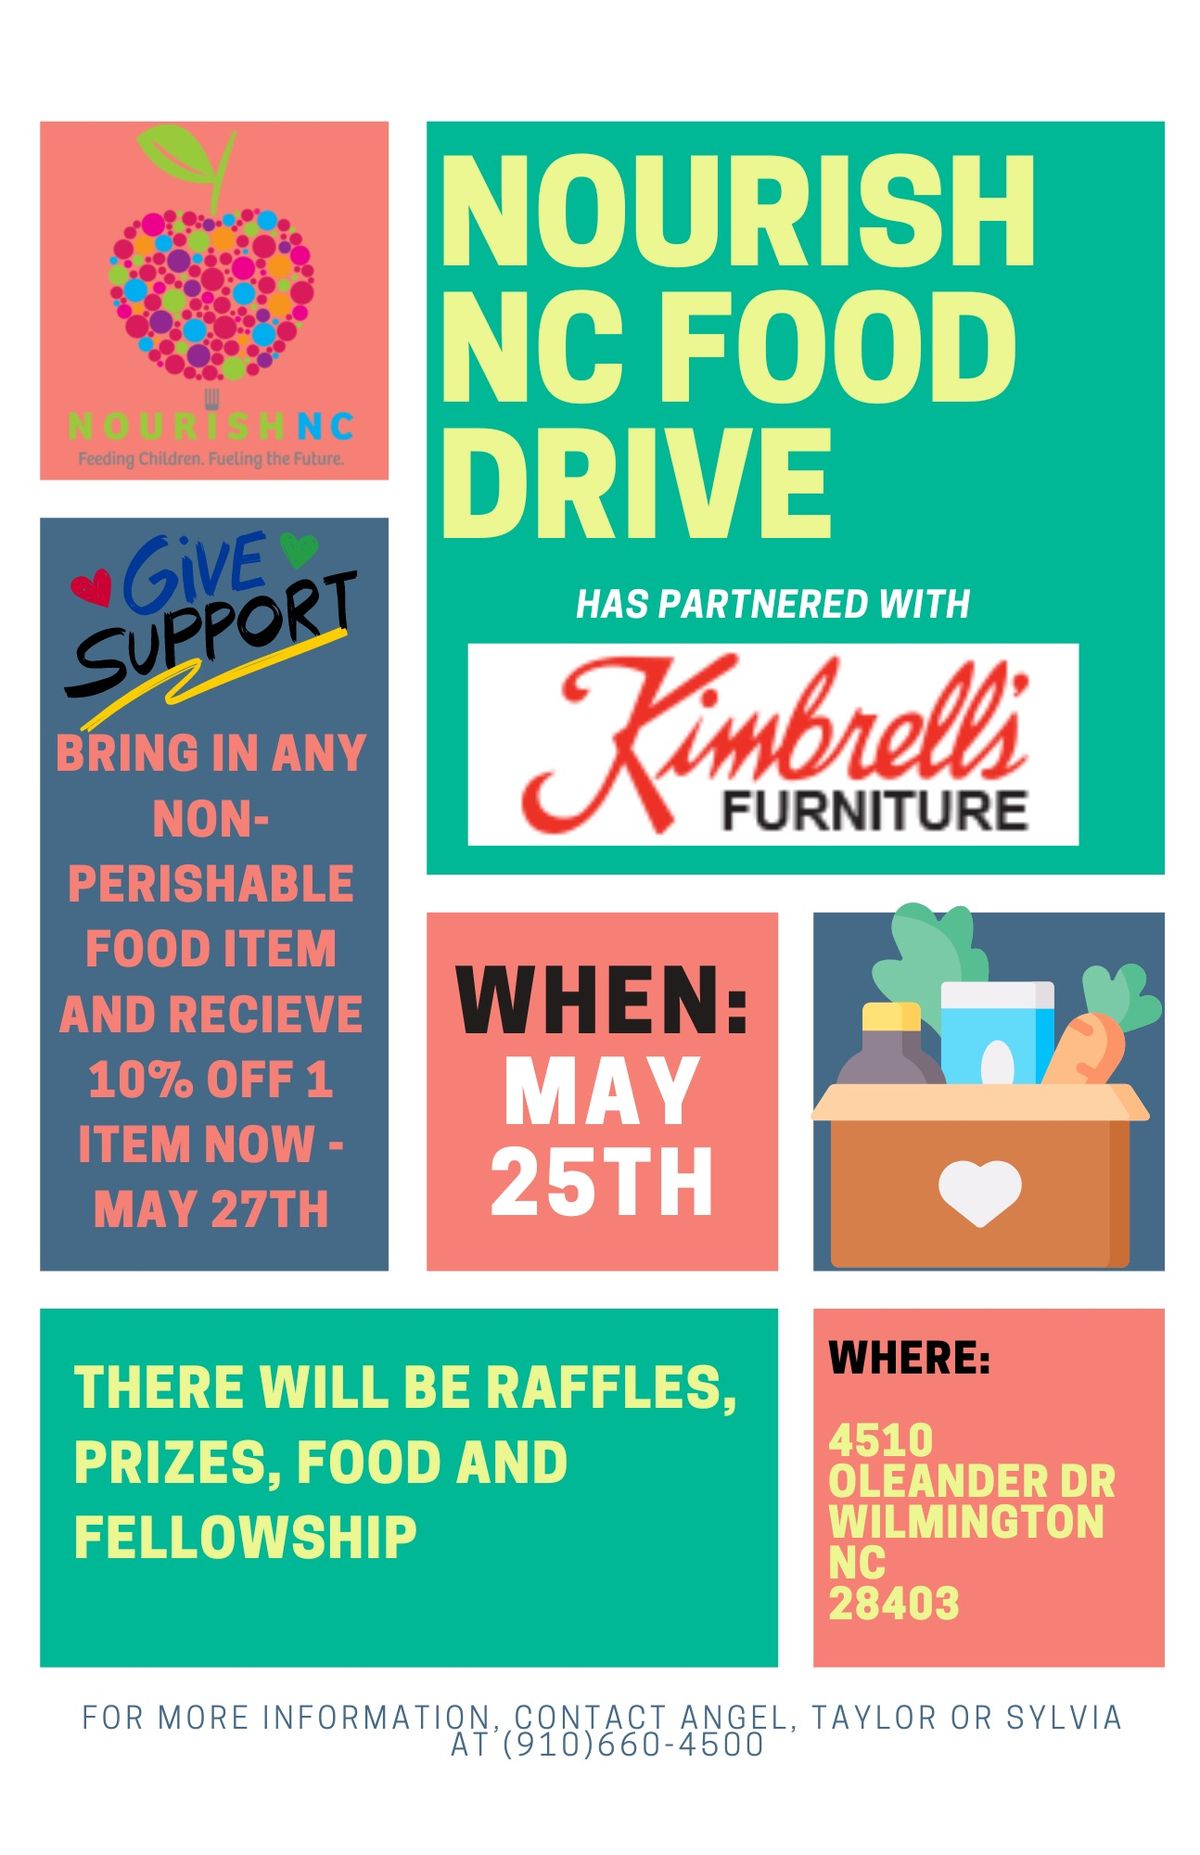 Kimbrells Furniture- Nourish NC Food Drive 